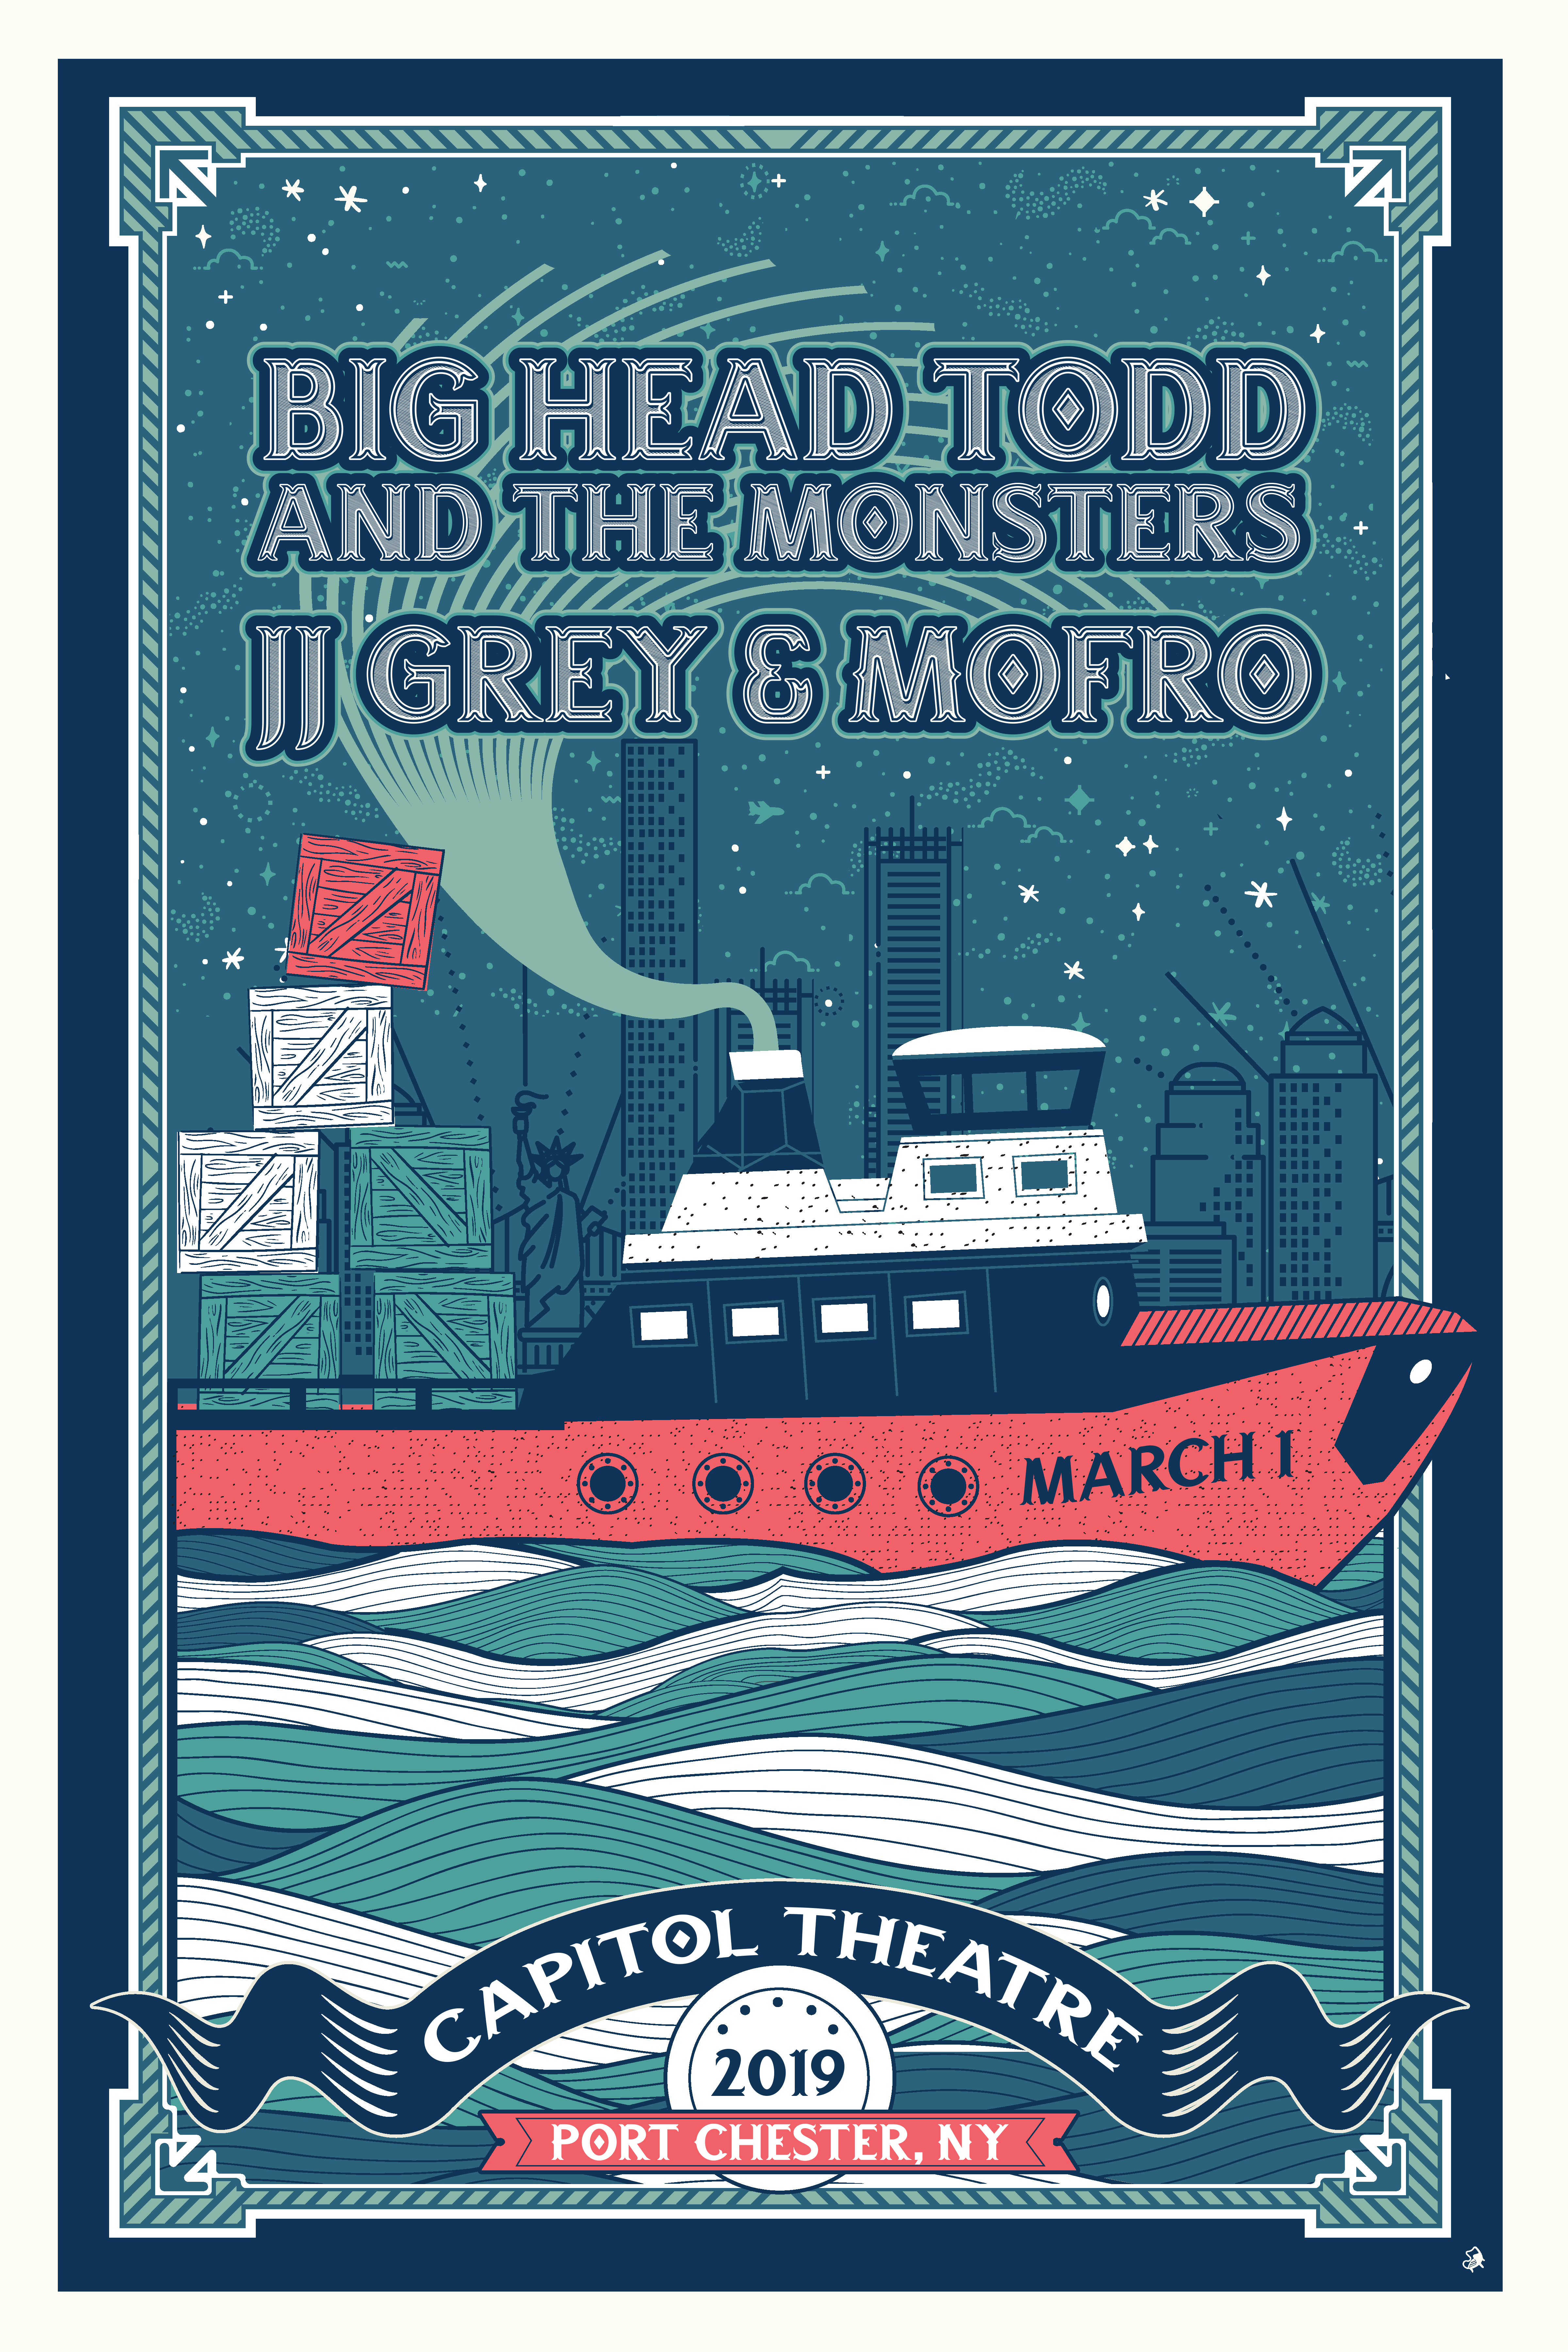 BHTM + JJ Grey & Mofro on Mar. 1!